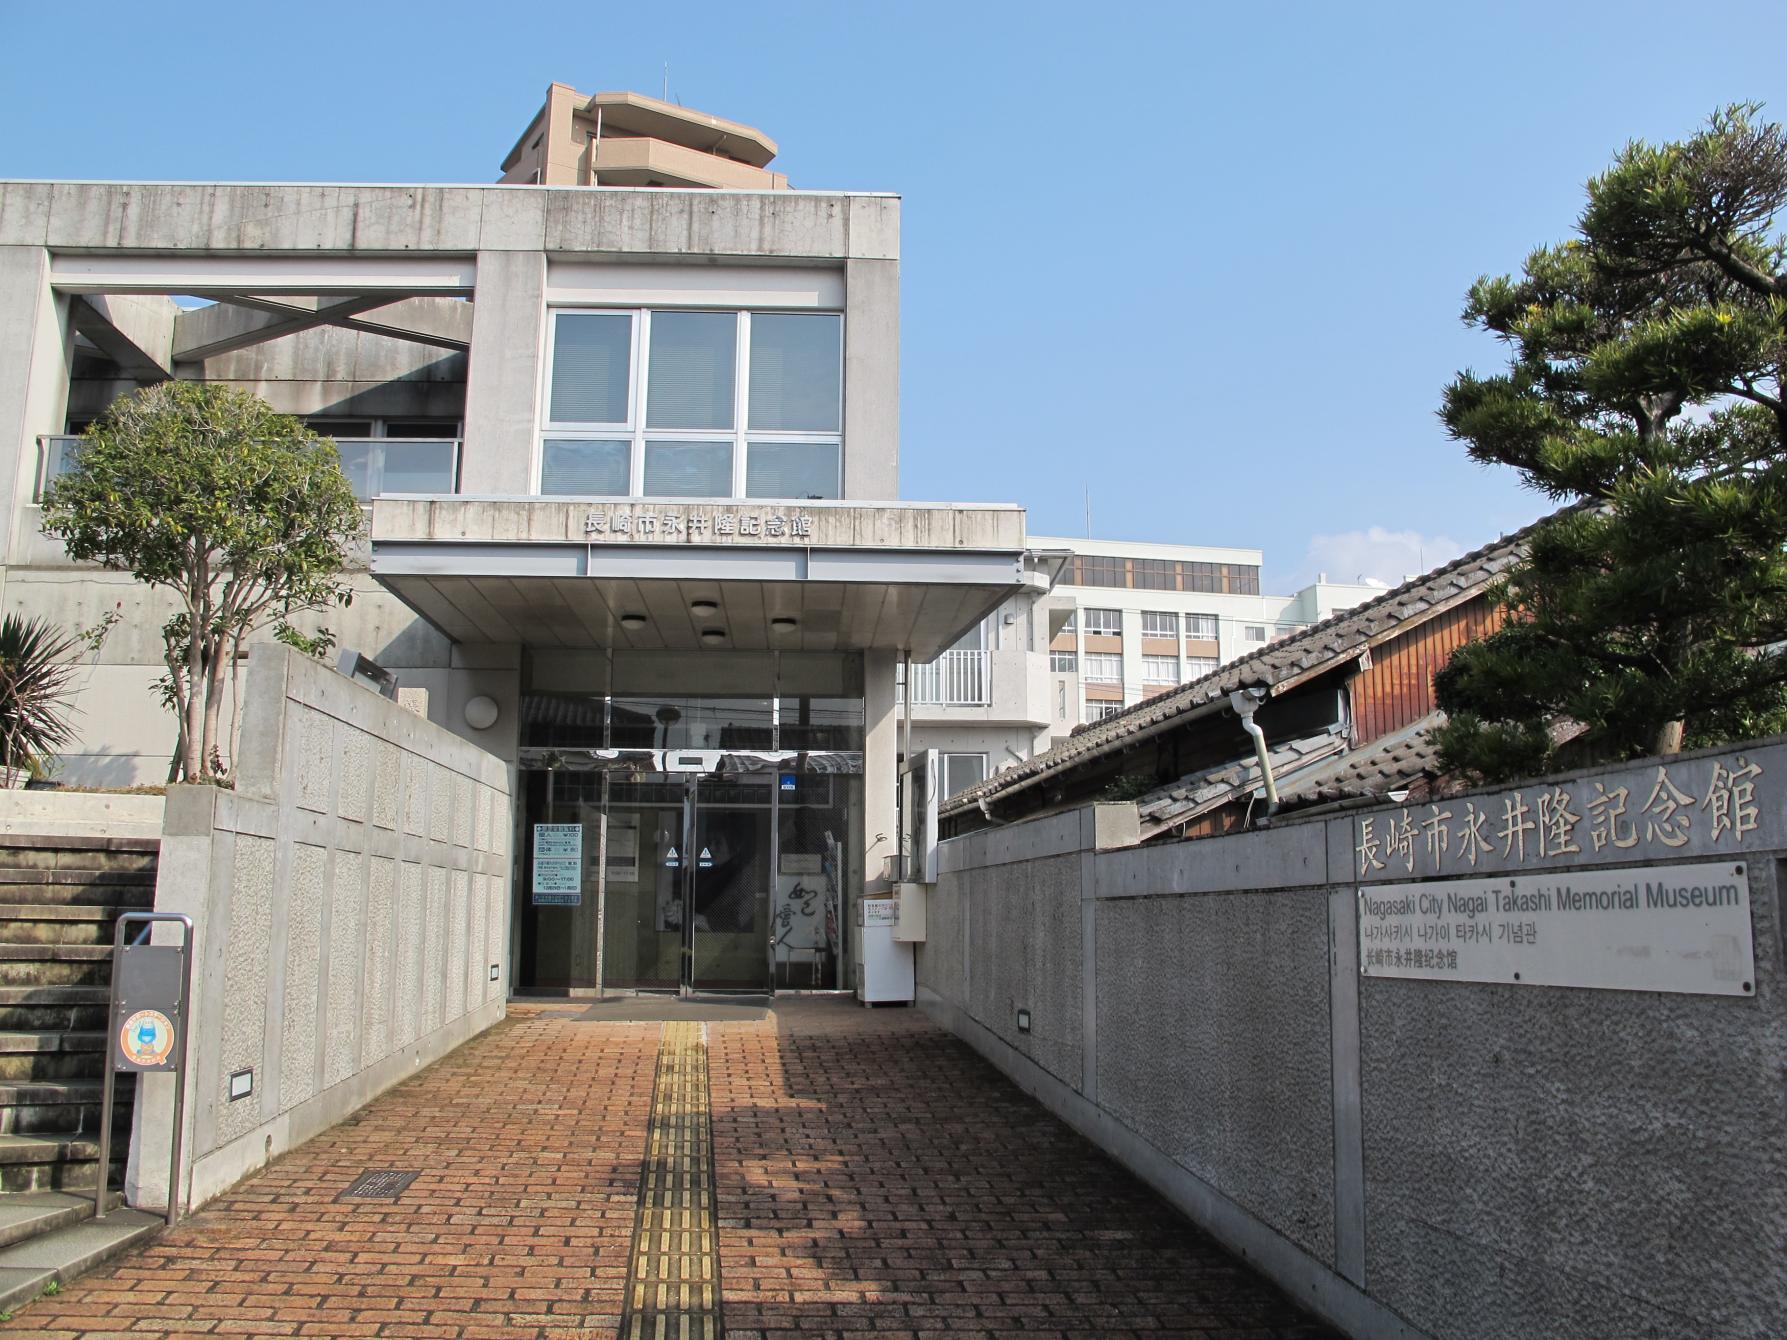 Nagai Takashi Memorial Museum (Nyokodo)-1